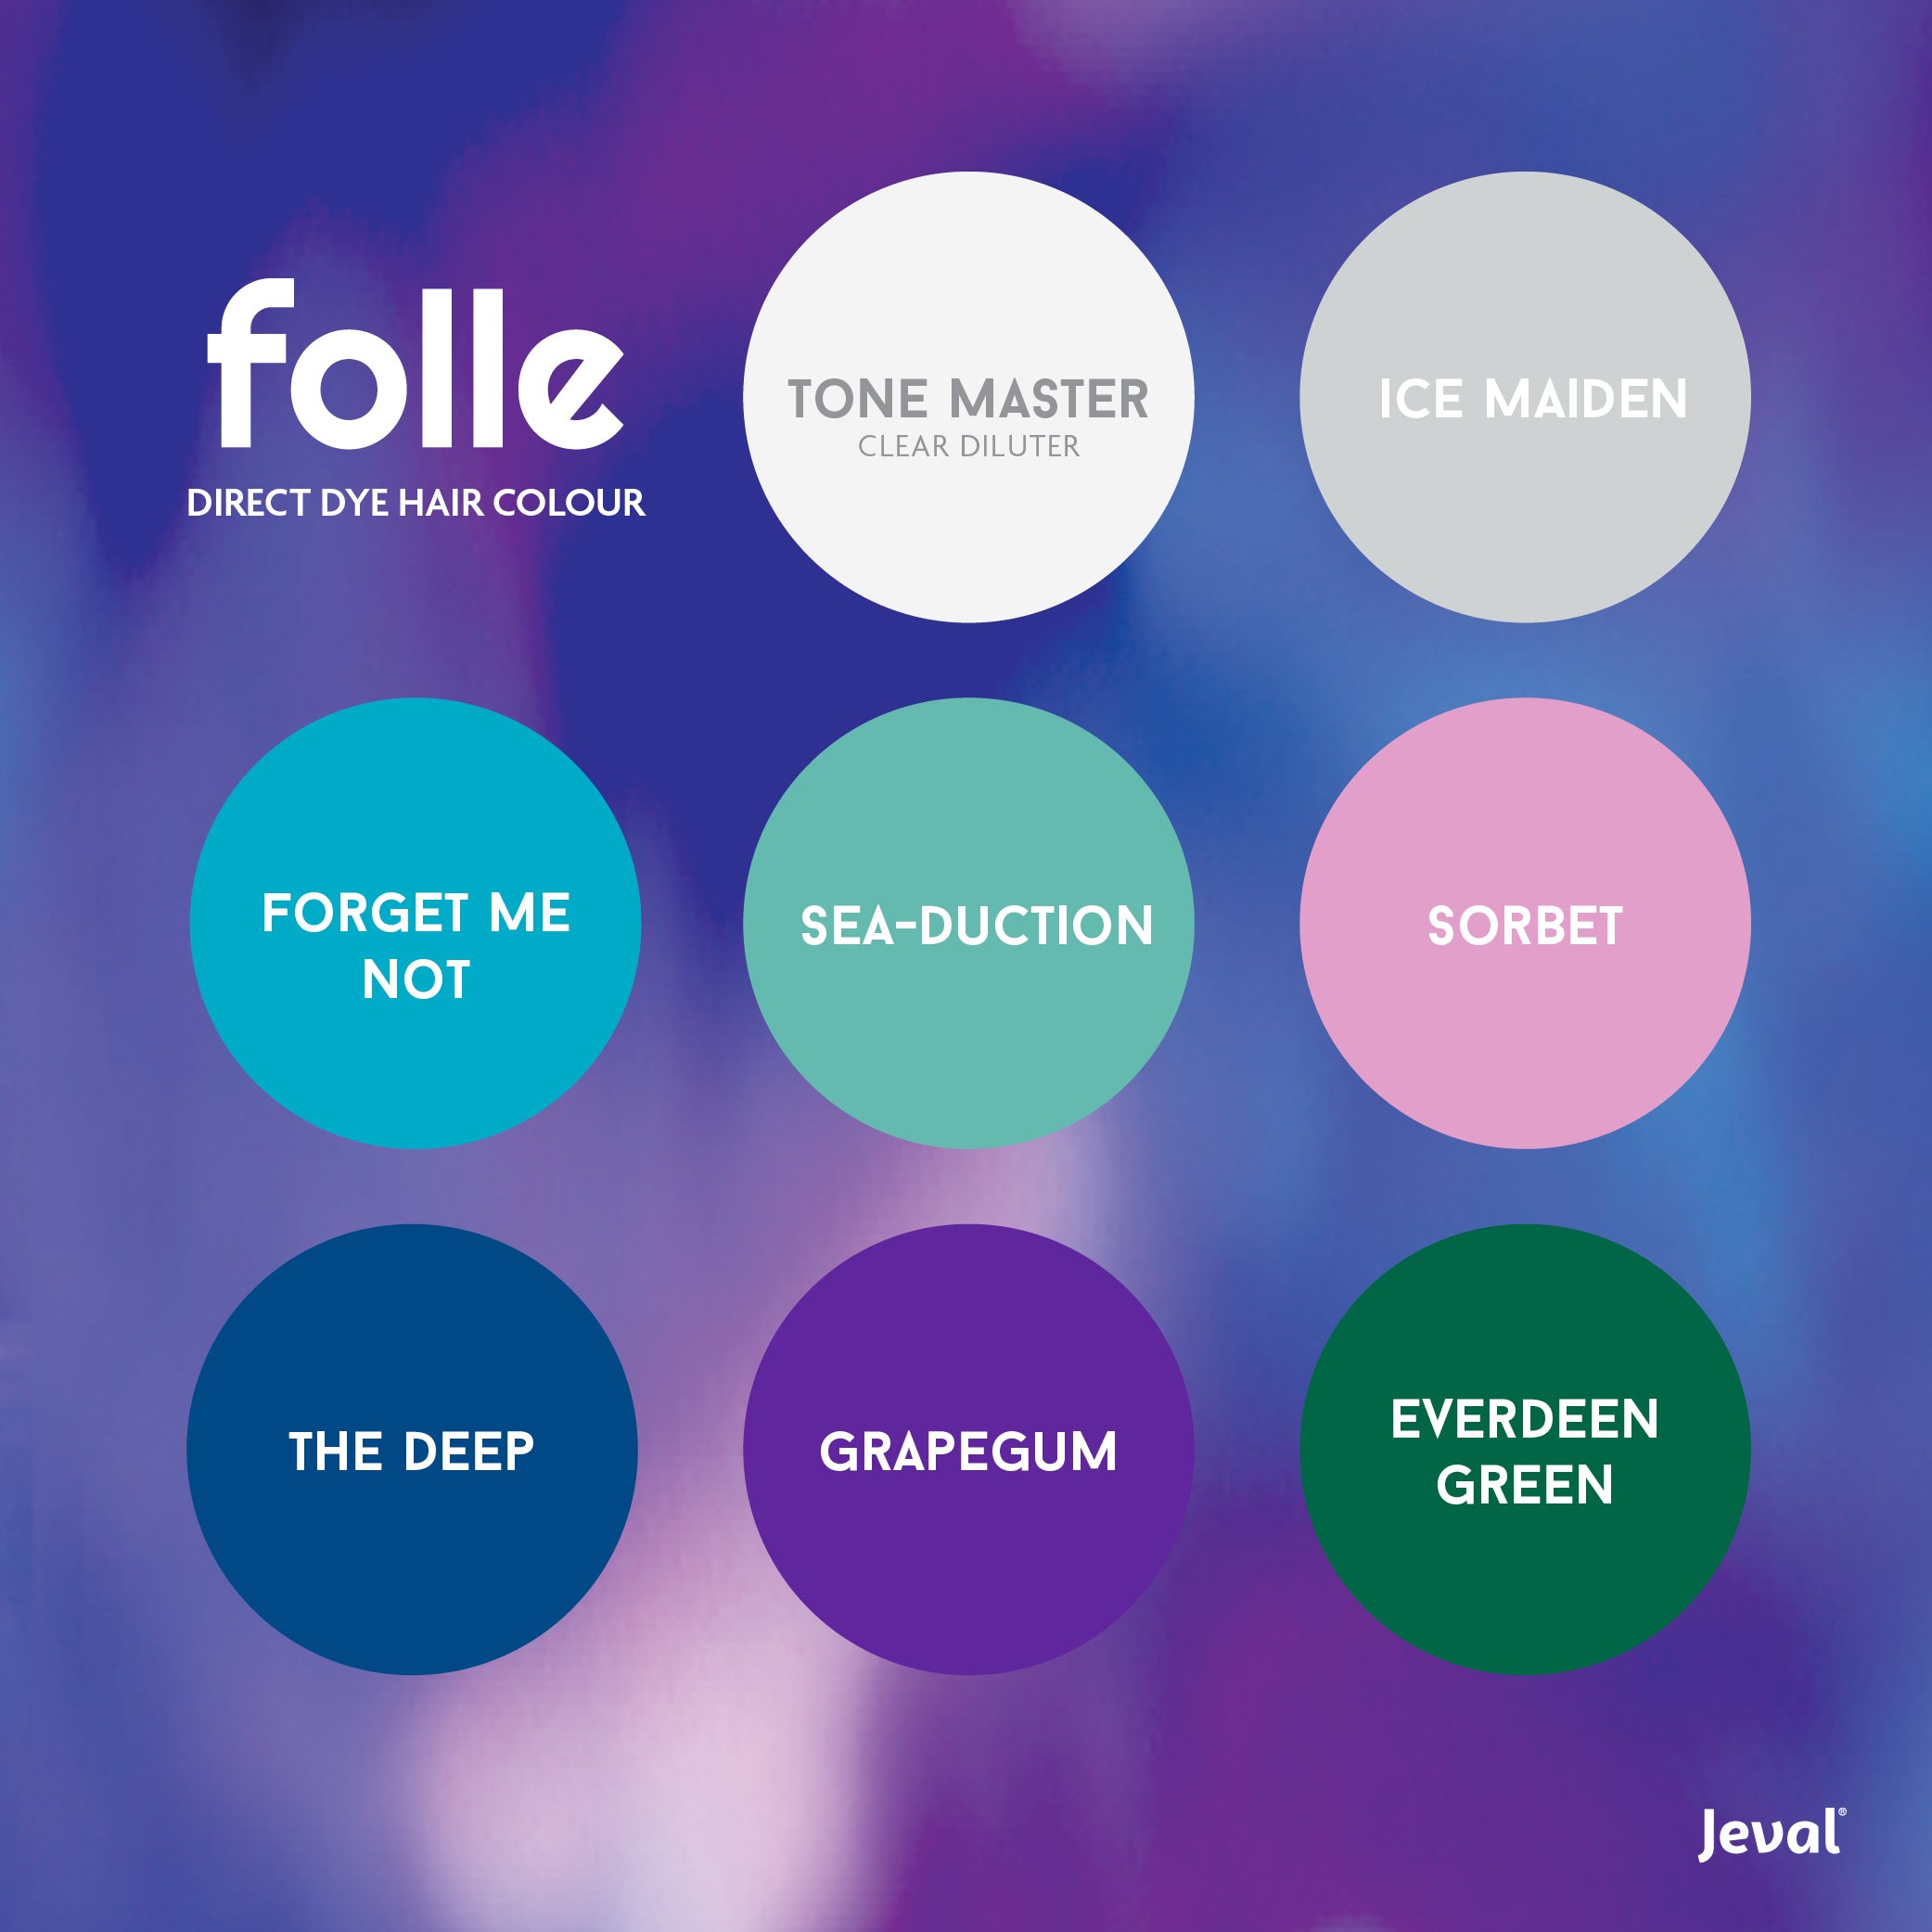 Folle Tone Master, Direct Dye Hair Colour